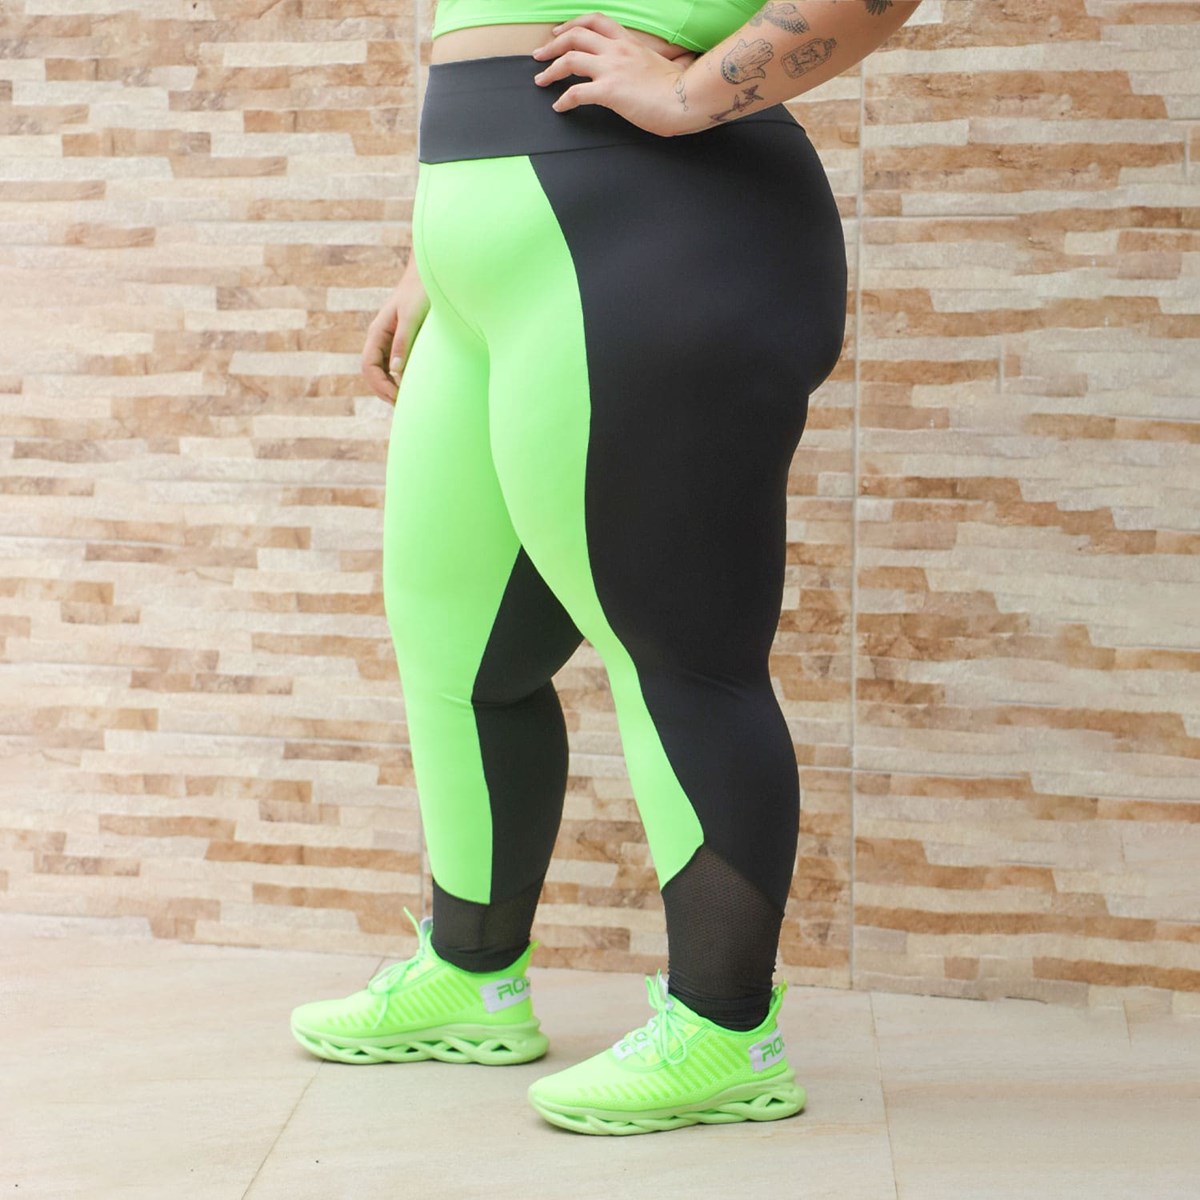 Calça Legging Feminina Plus Size Verde Neon e Preta com Tela | Ref: 4.4.4136-0132